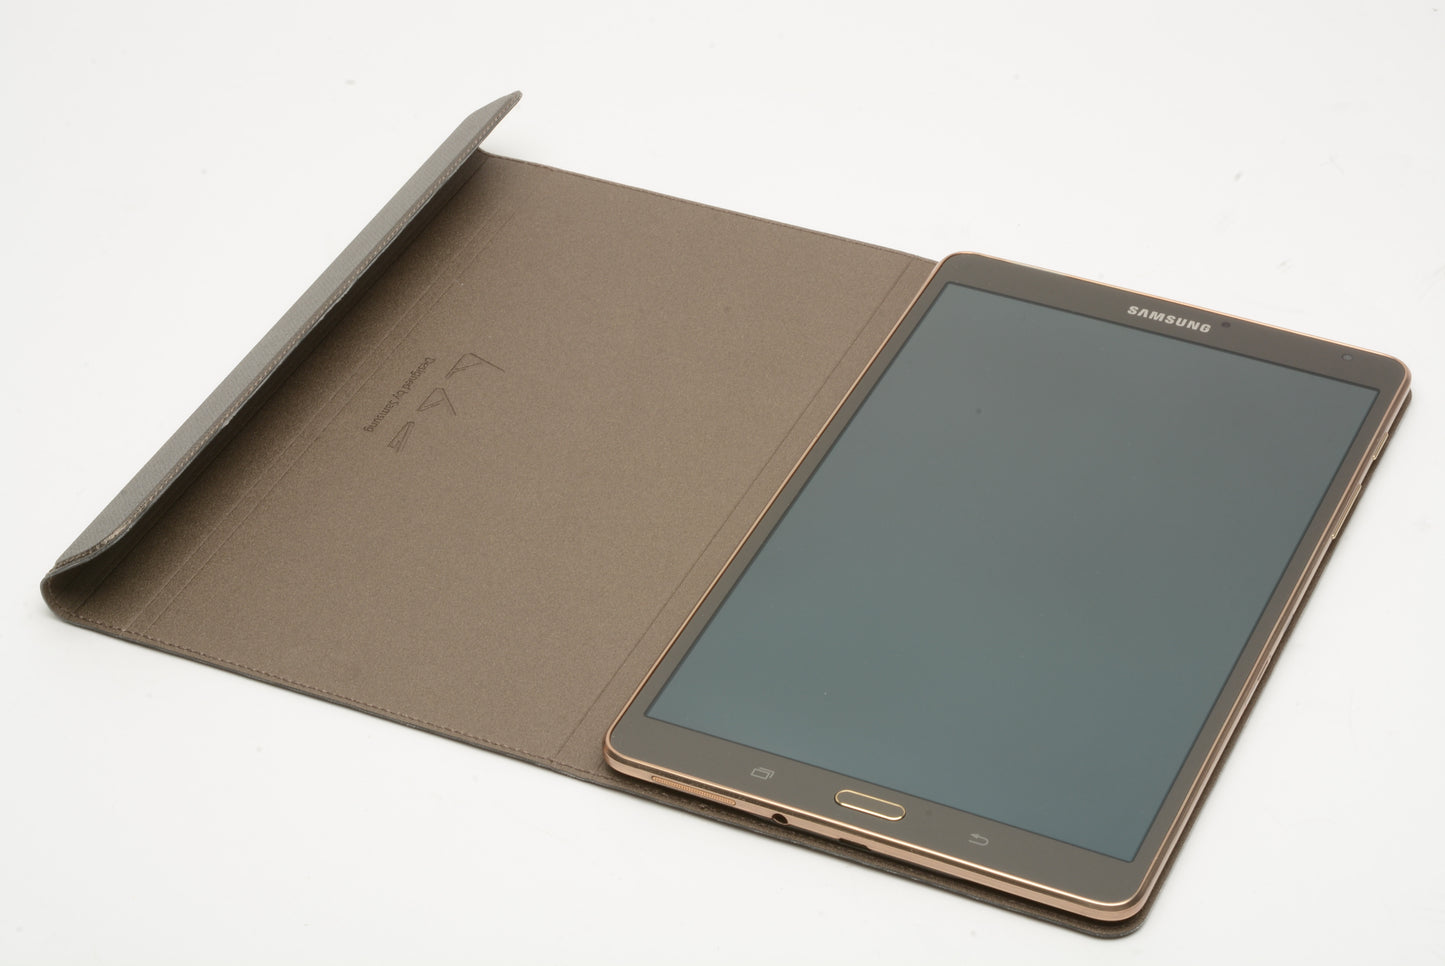 Samsung Galaxy Tab S SM-T700 16GB Titanium Gold WI-FI 8.4" Tablet + 2 covers